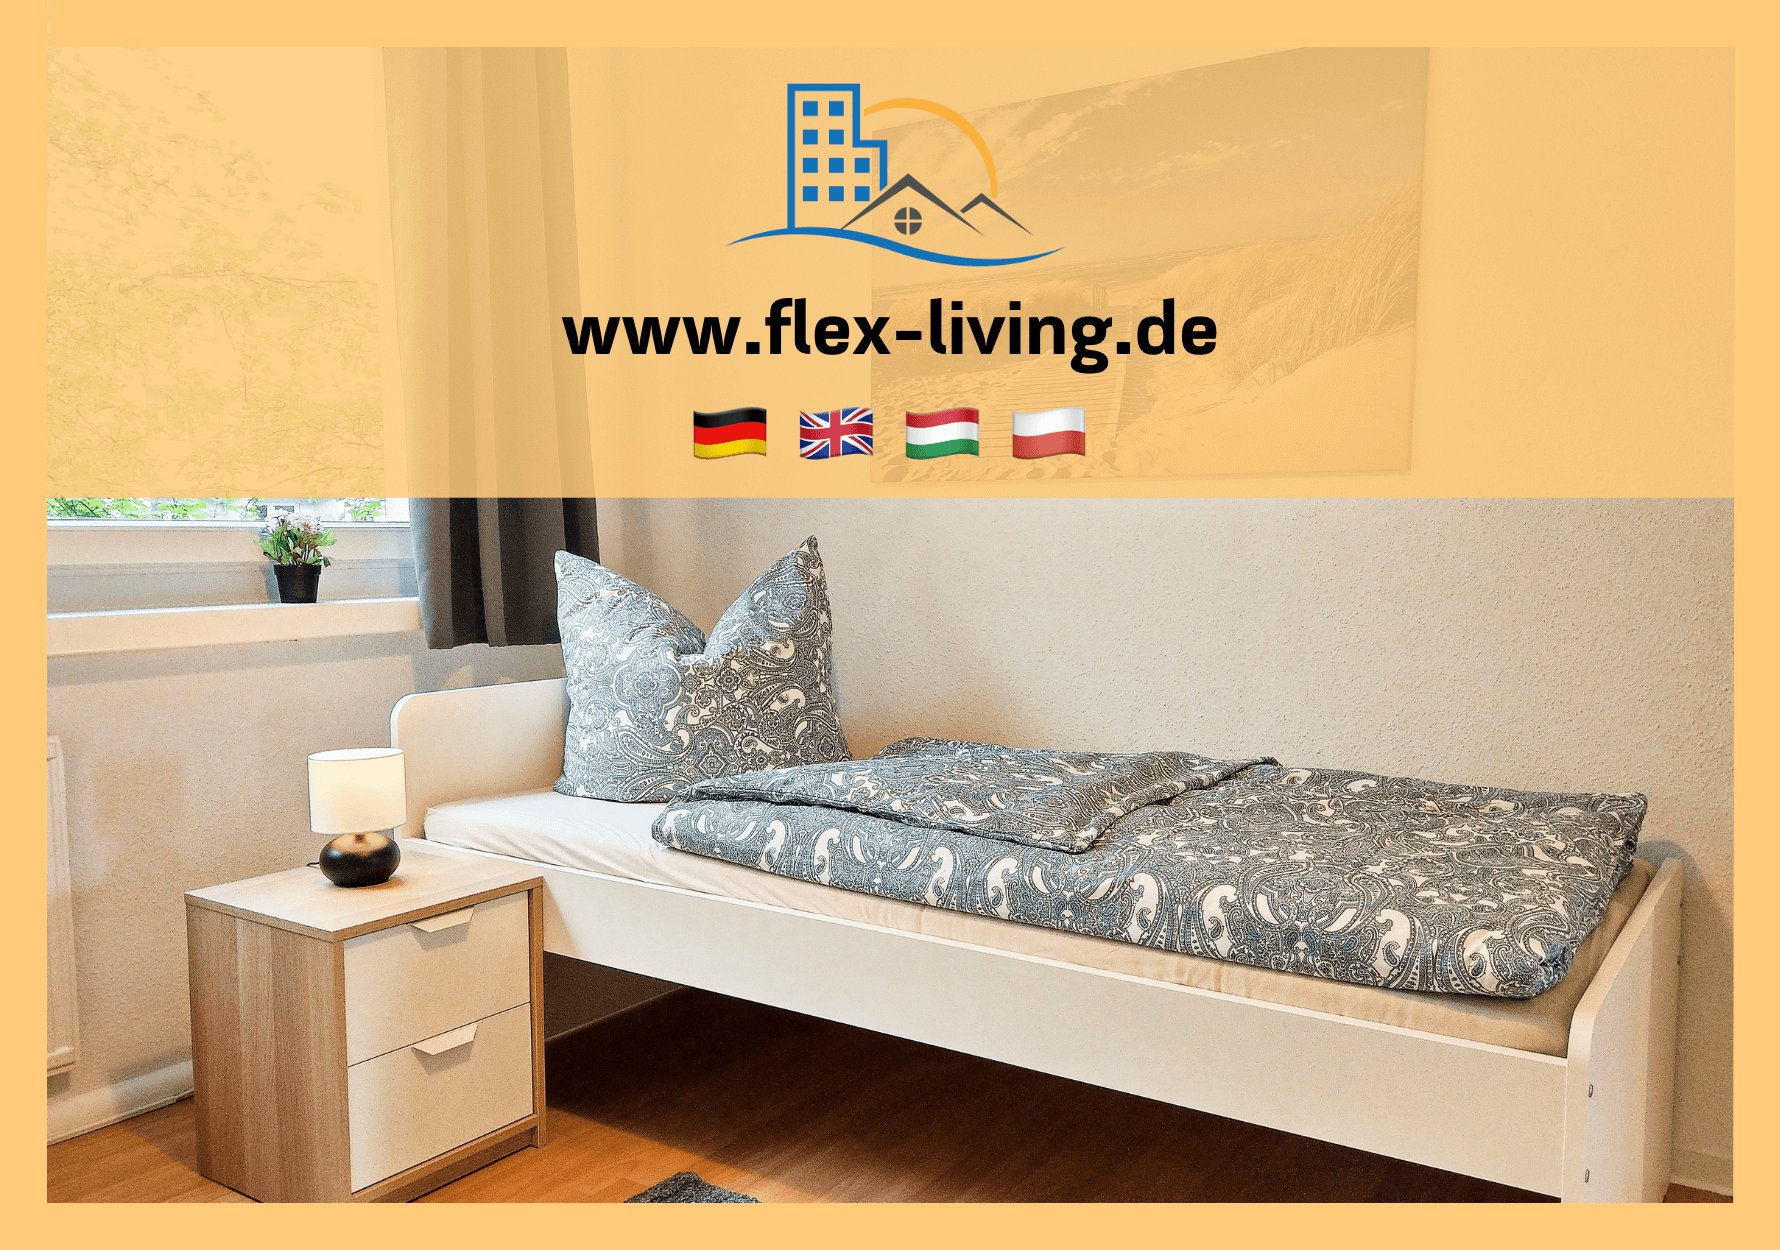  flex living - Monteurwohnungen in Halle/Saale (DEU|EN|PL|HU) in Halle (Saale)